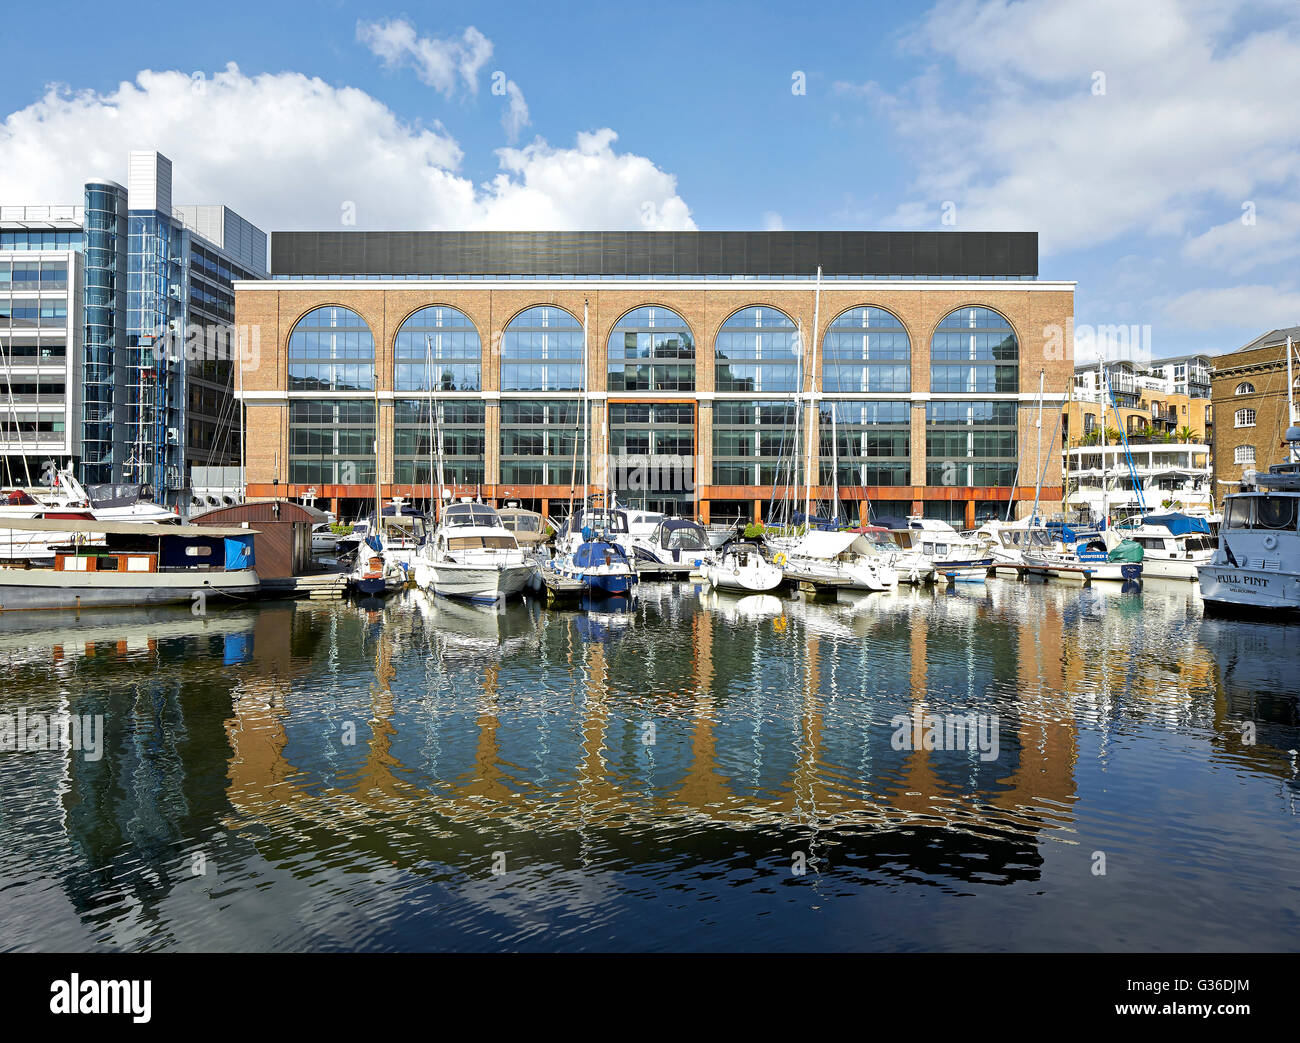 View across marina towards refurbished office building. Commodity Quay, London, United Kingdom. Architect: BuckleyGrayYeoman, 2014. Stock Photo